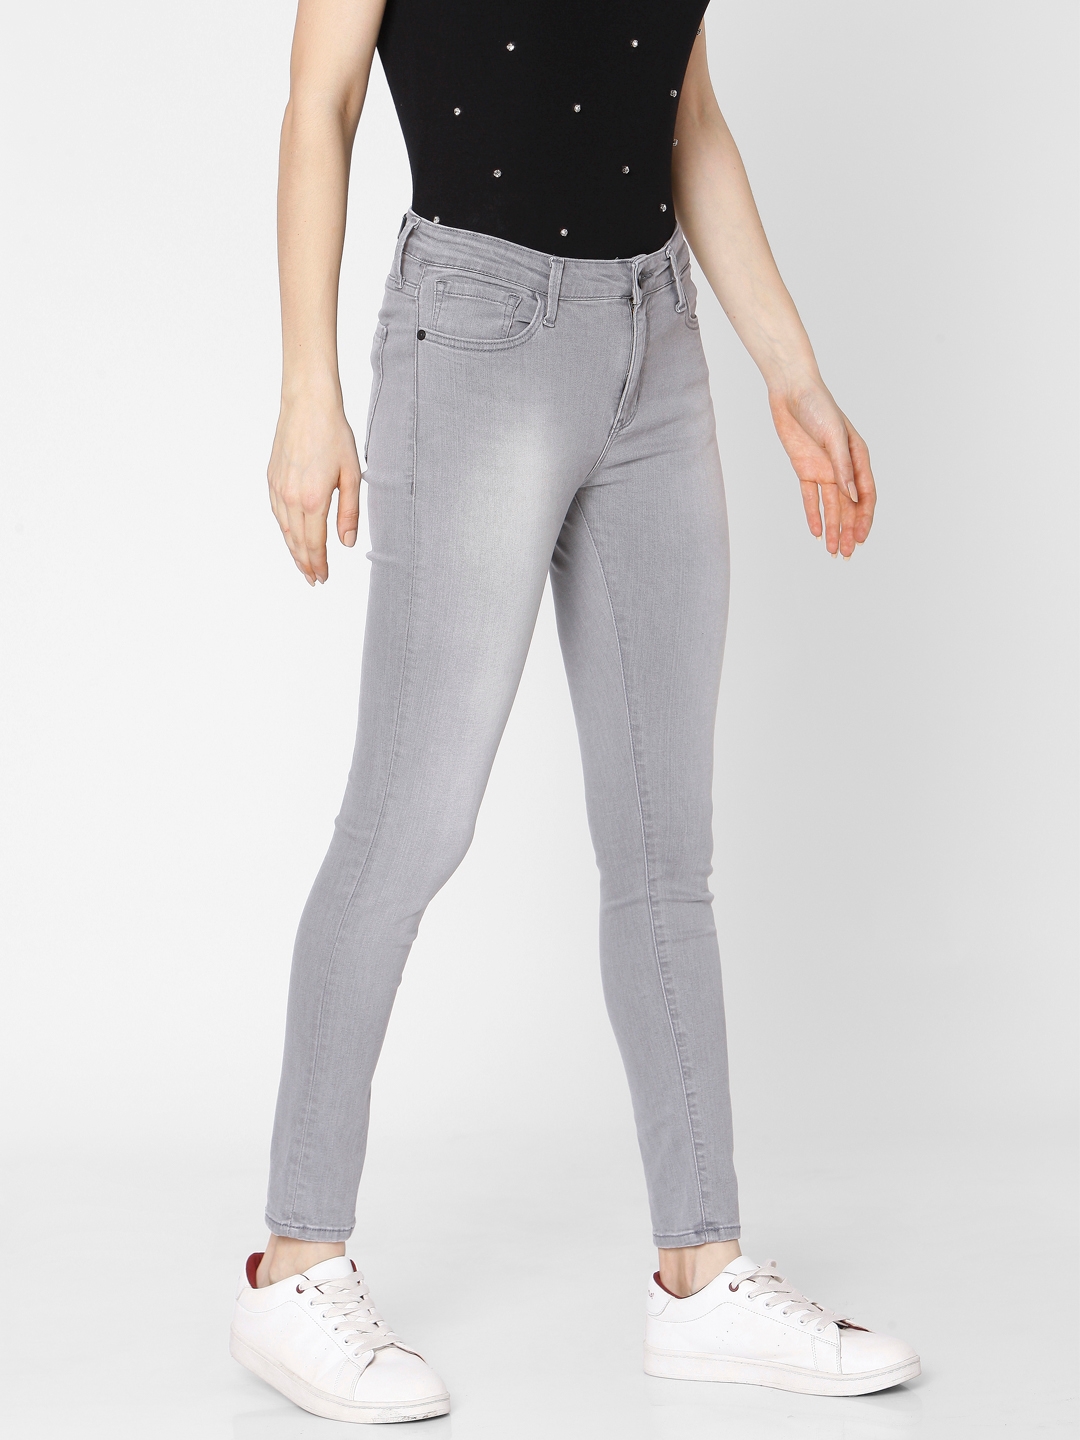 spykar | Women's Grey Cotton Solid Skinny Jeans 3